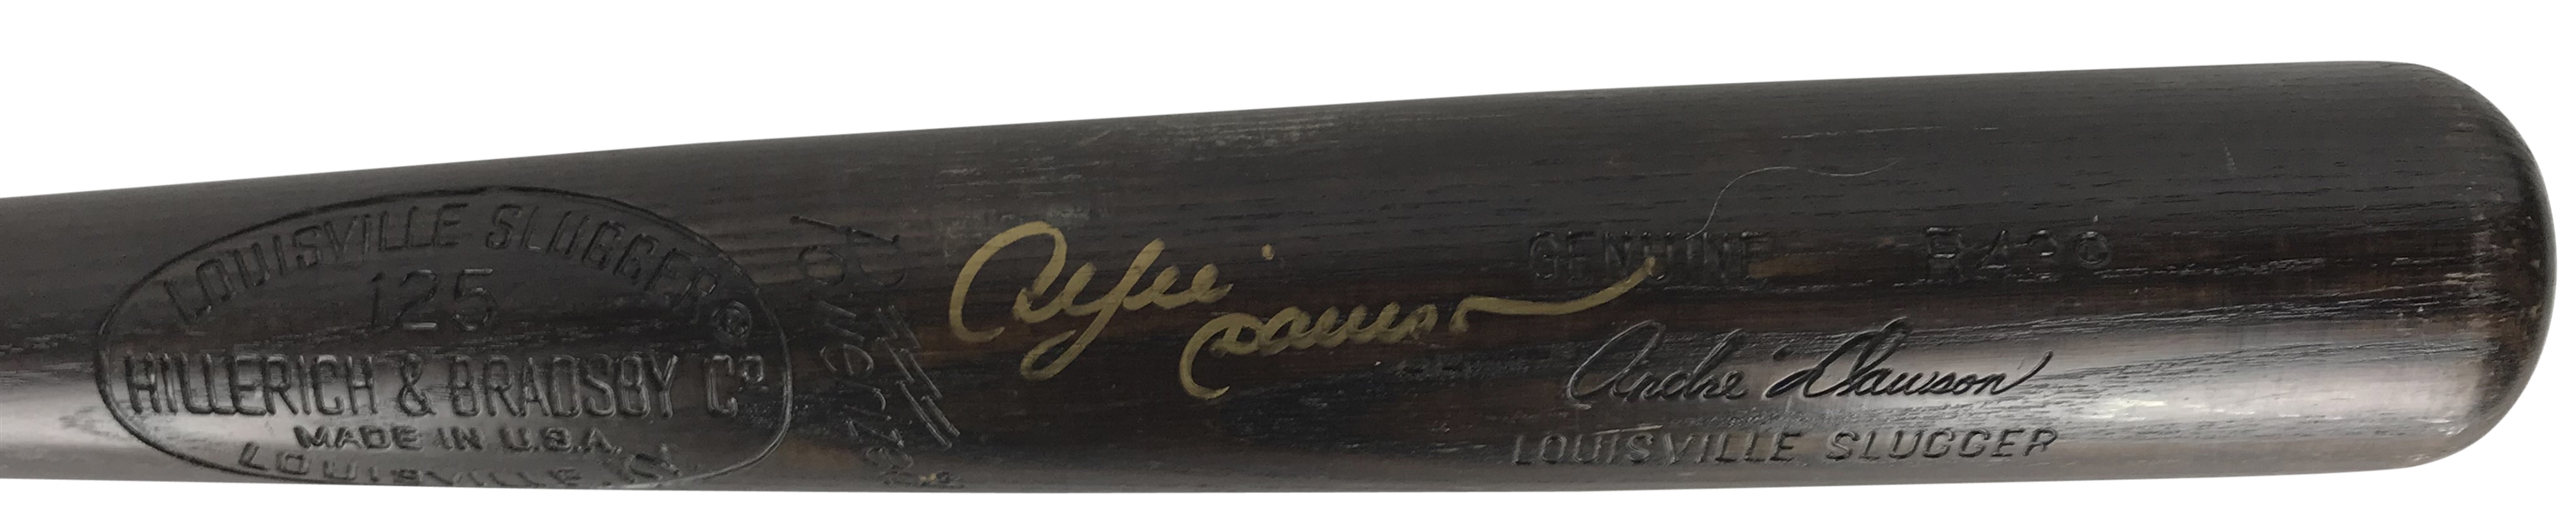 Andre Dawson Signed & Game Used R43 1979 Baseball Bat - PSA/DNA GU 9!